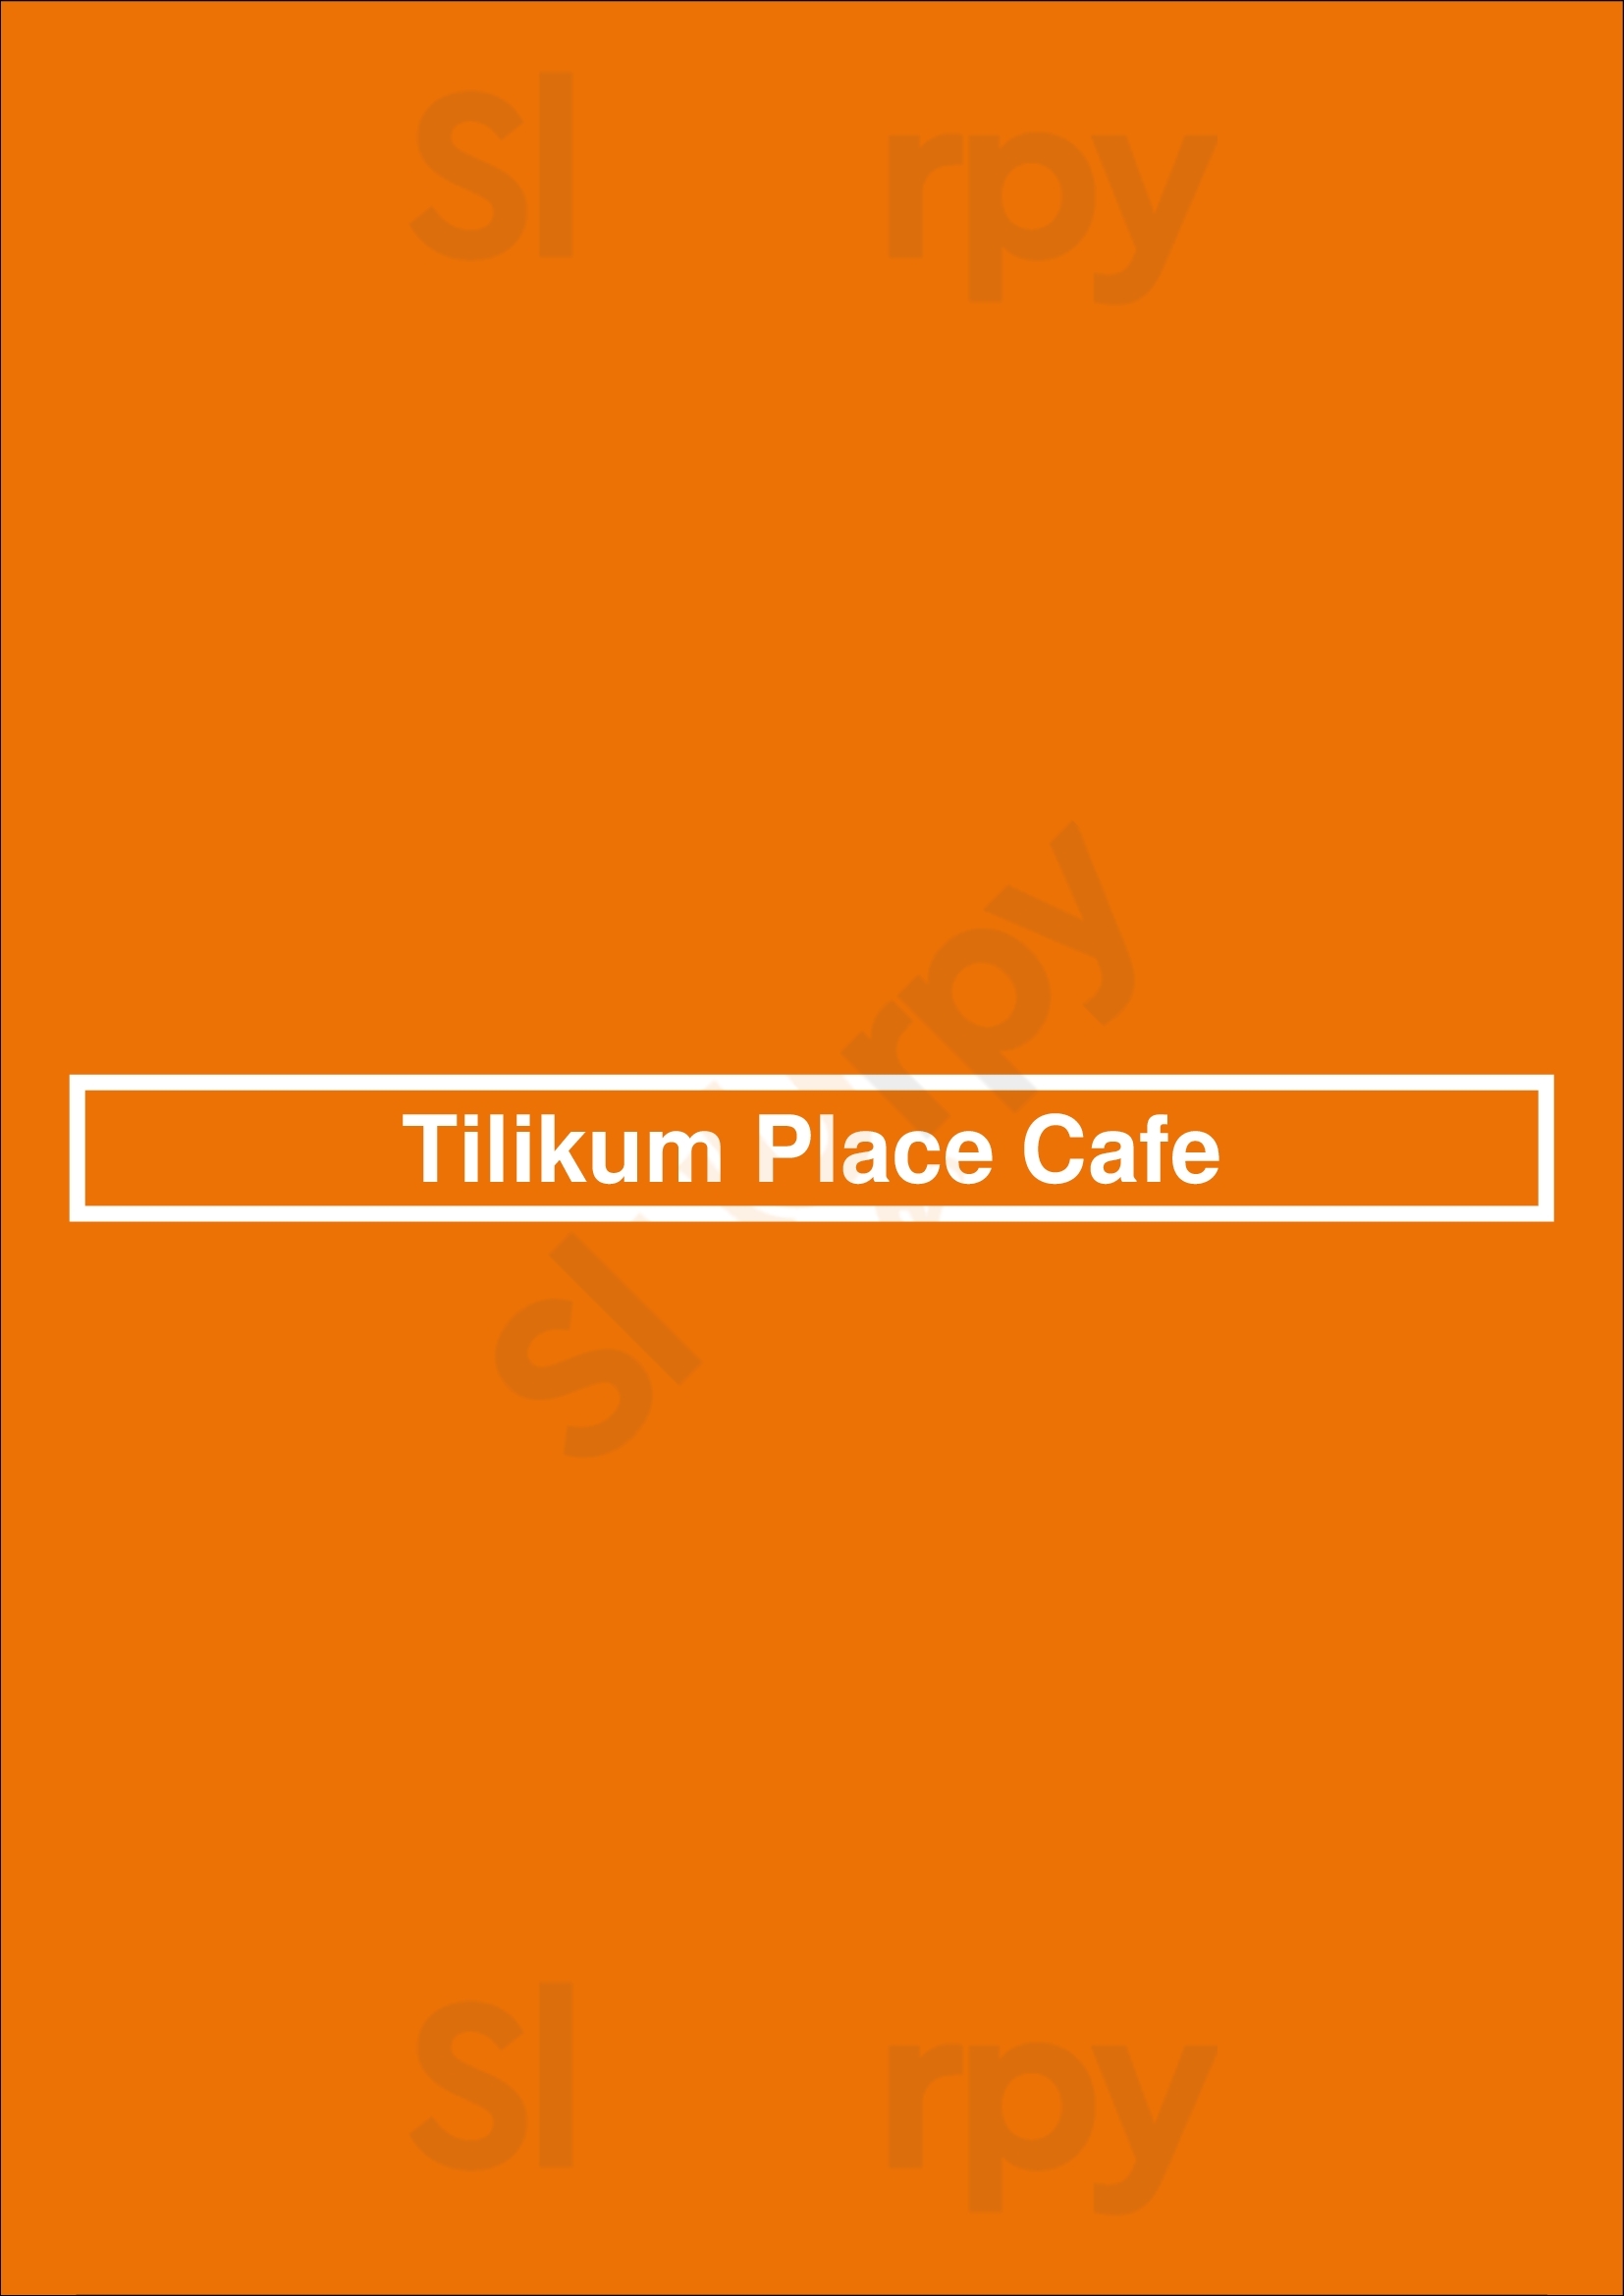 Tilikum Place Cafe Seattle Menu - 1